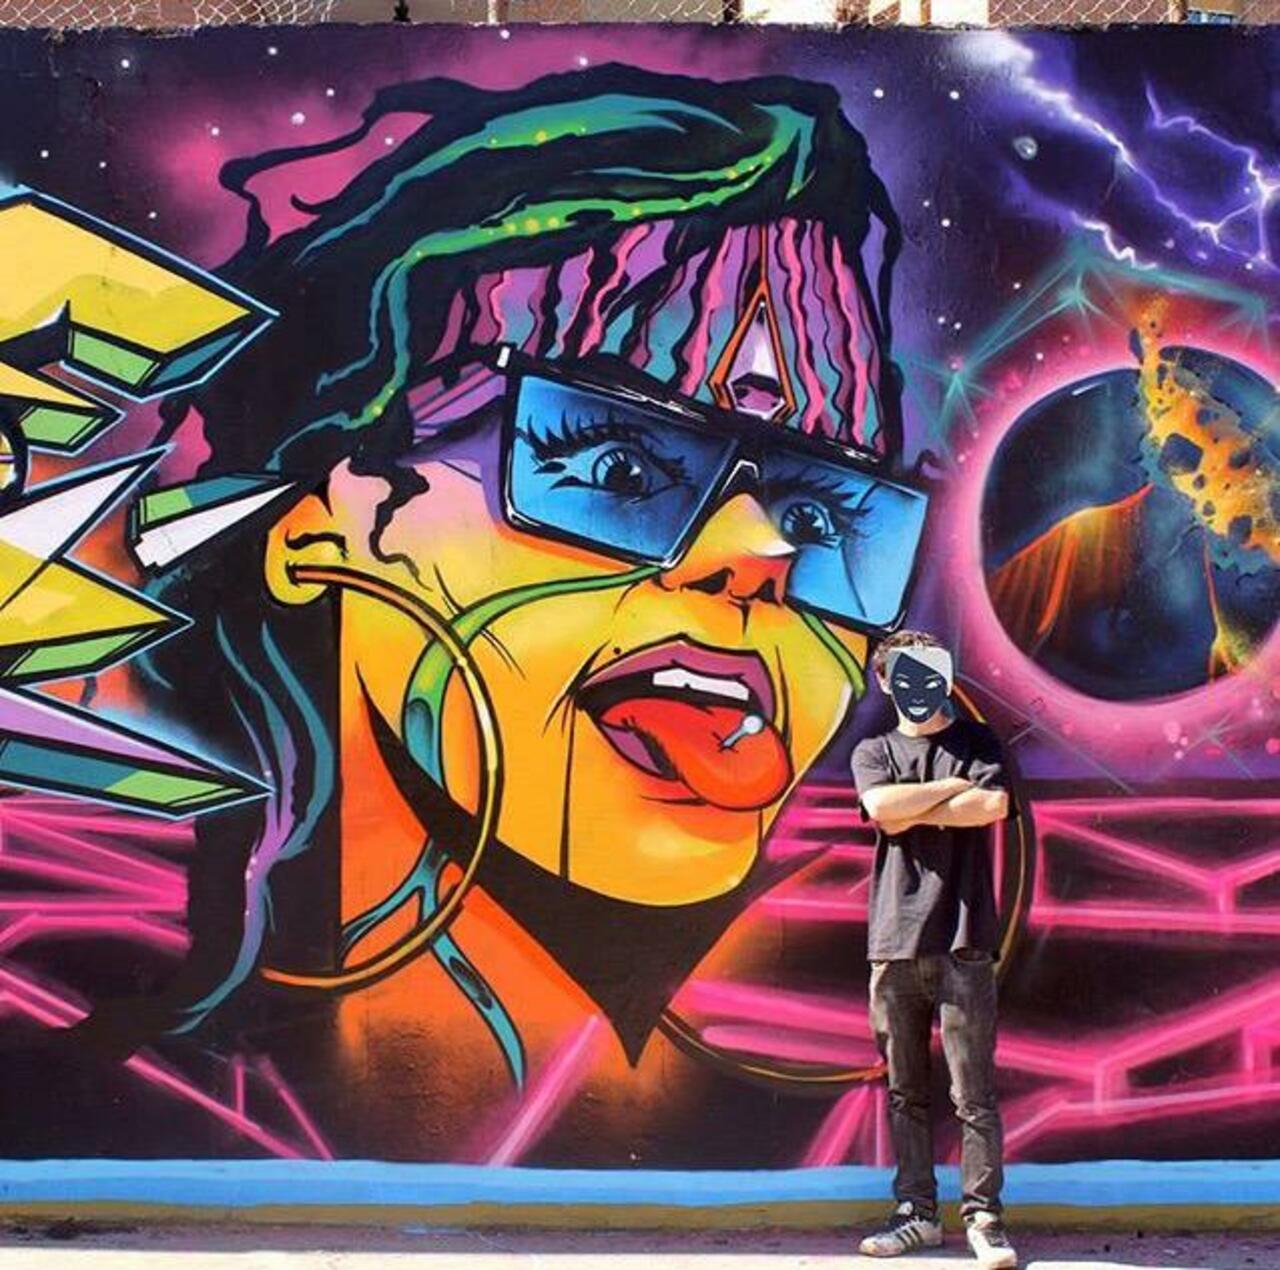 Brilliant new Street Art by the artist Jaycaes

#art #graffiti #mural #streetart http://t.co/Wg1IvTXqvP